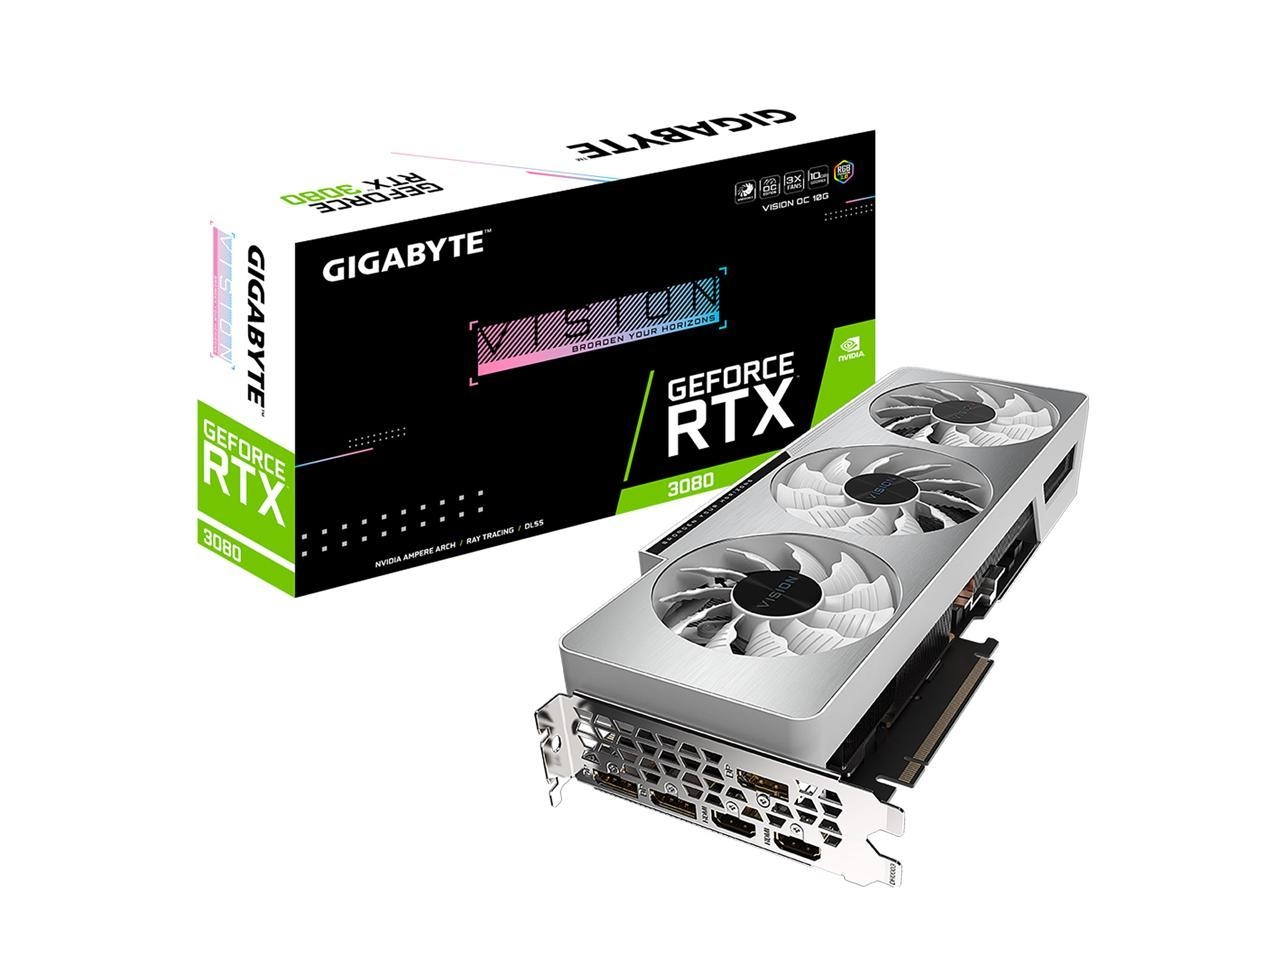 GIGABYTE GeForce RTX 3080 VISION OC 10G Package